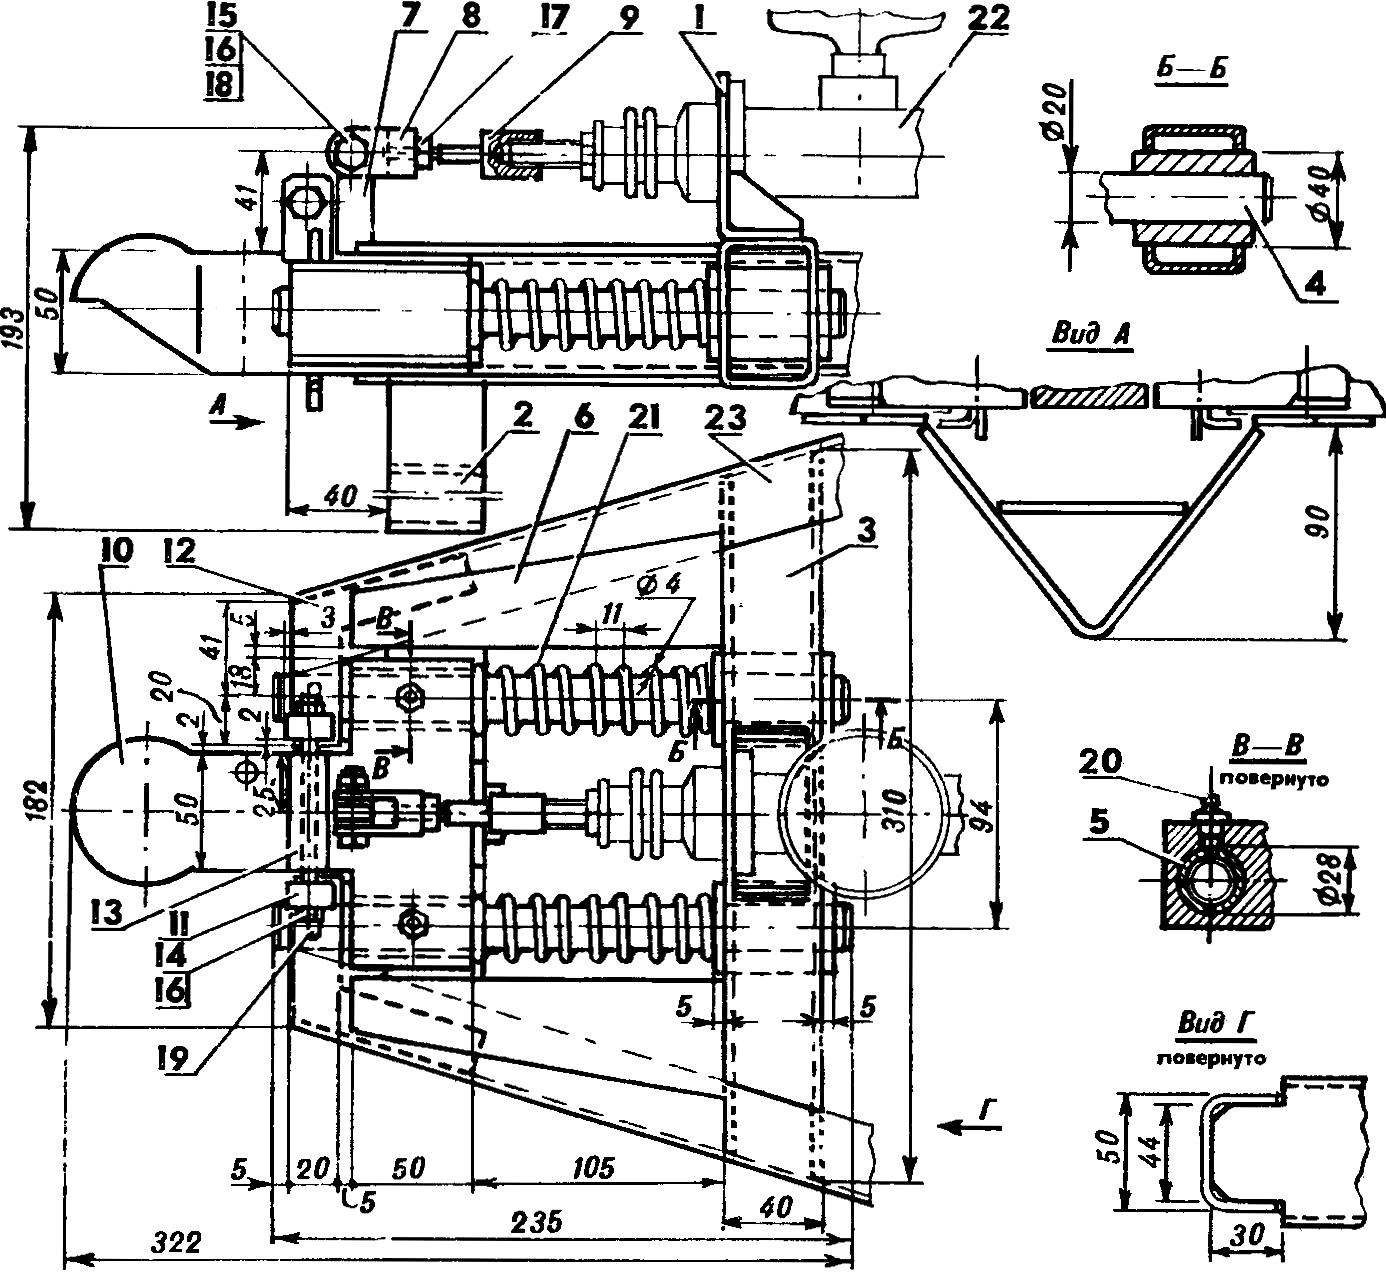 Fig. 3. Inertia braking system of the truck trailer